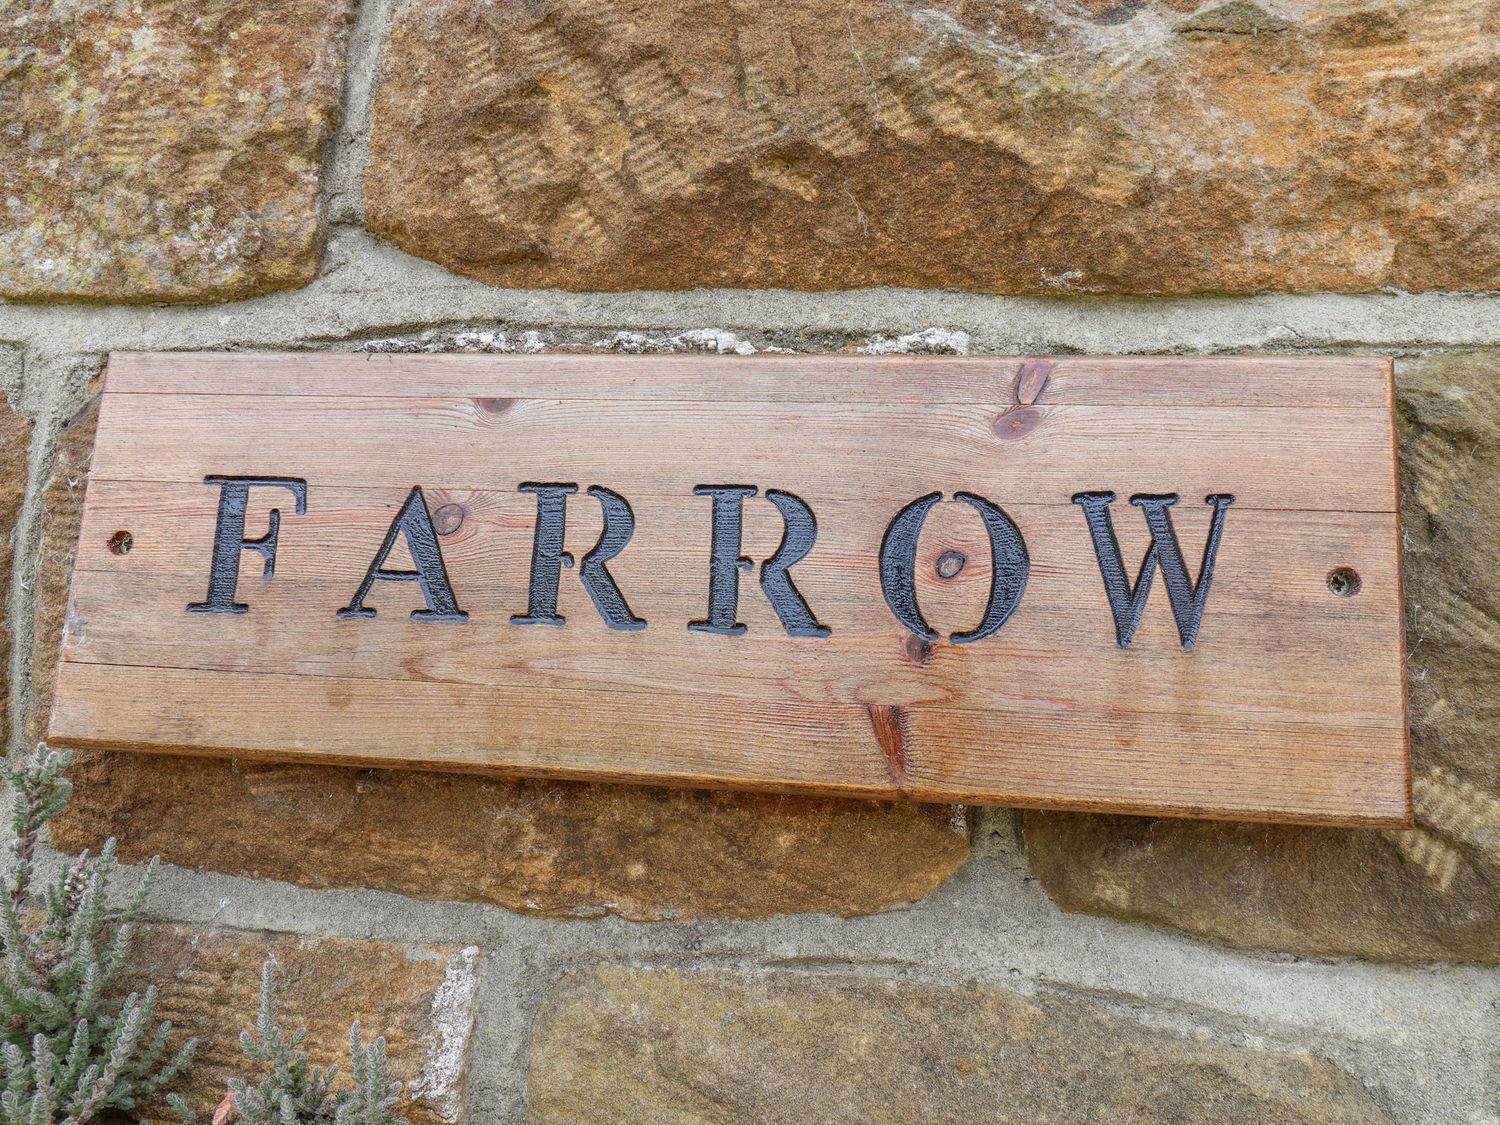 Farrow, Robin Hoods Bay